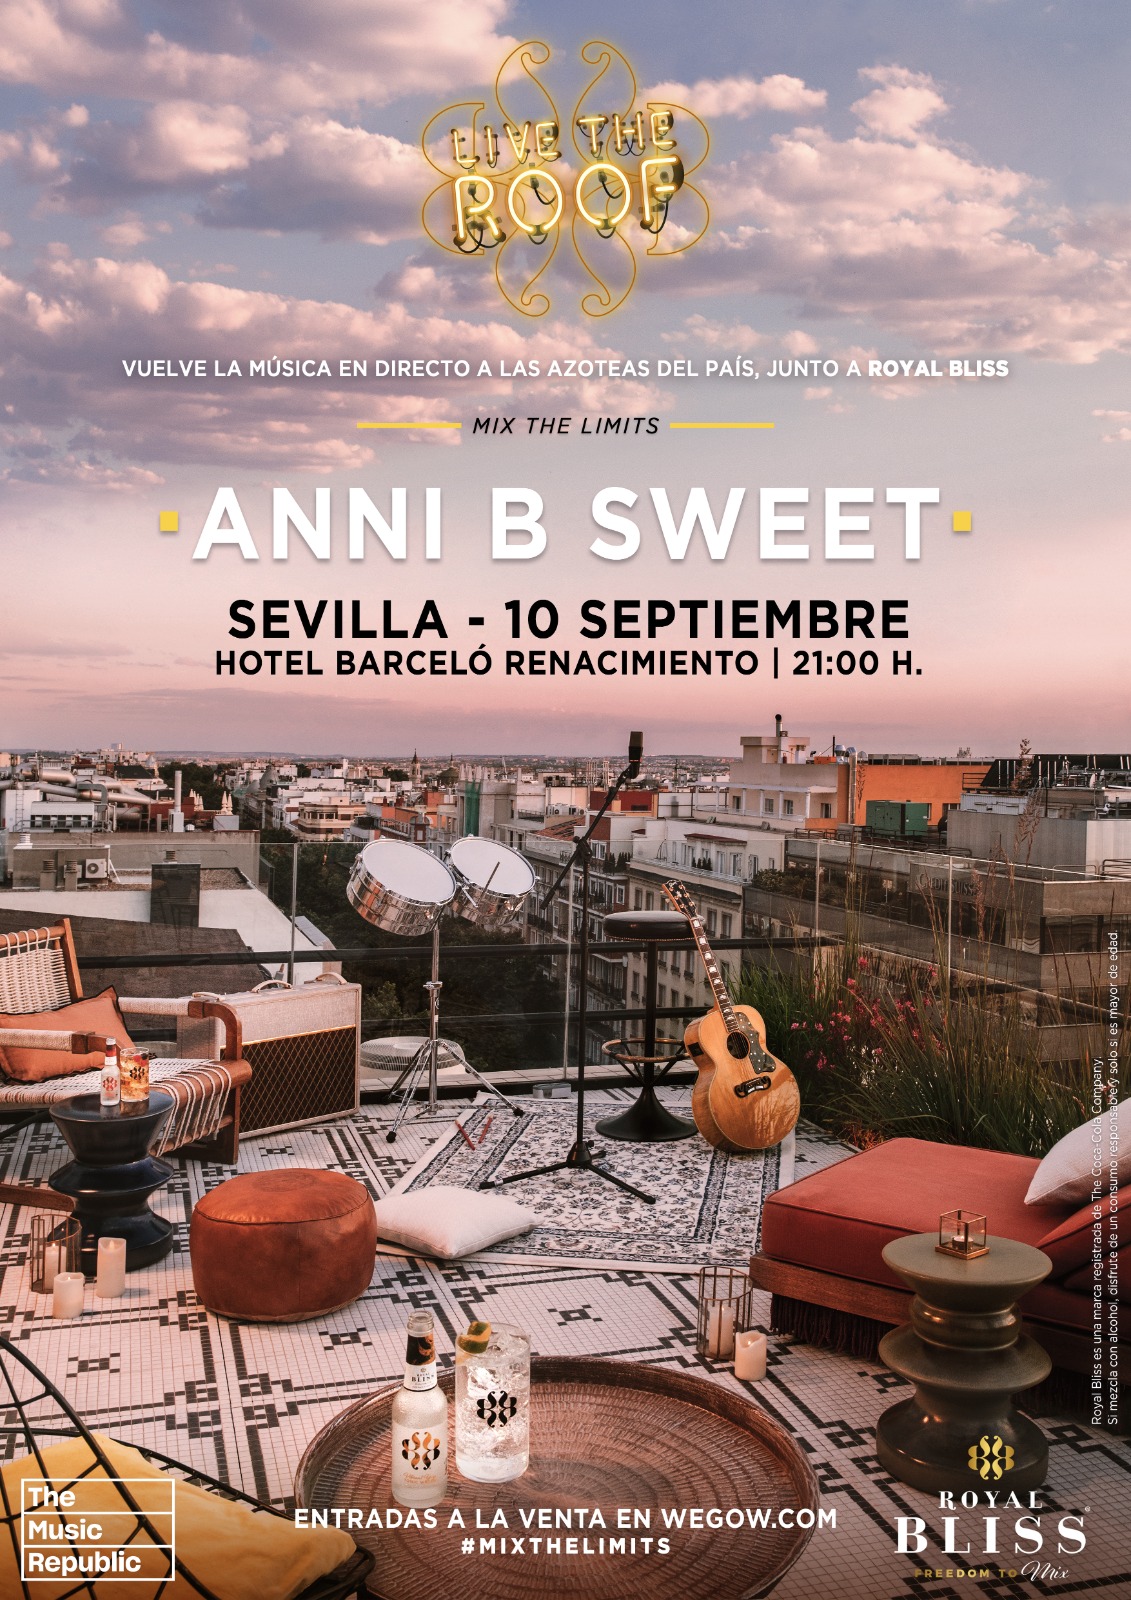 Anni B Sweet - Live The Roof Sevilla 2021